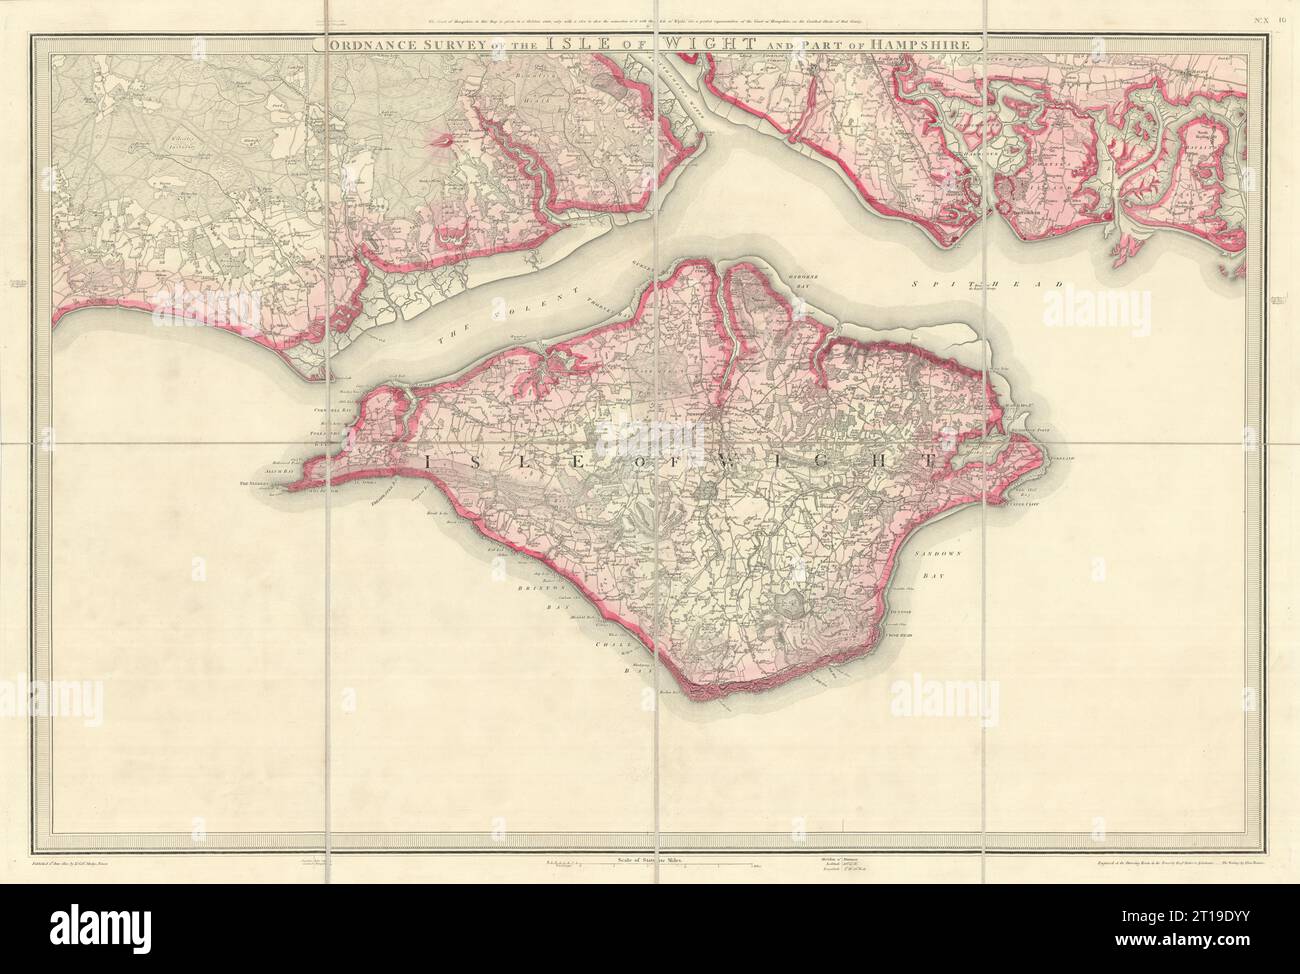 OS #10 Isola di Wight e Hampshire Coast. Lymington Portsmouth New Forest 1810 mappa Foto Stock